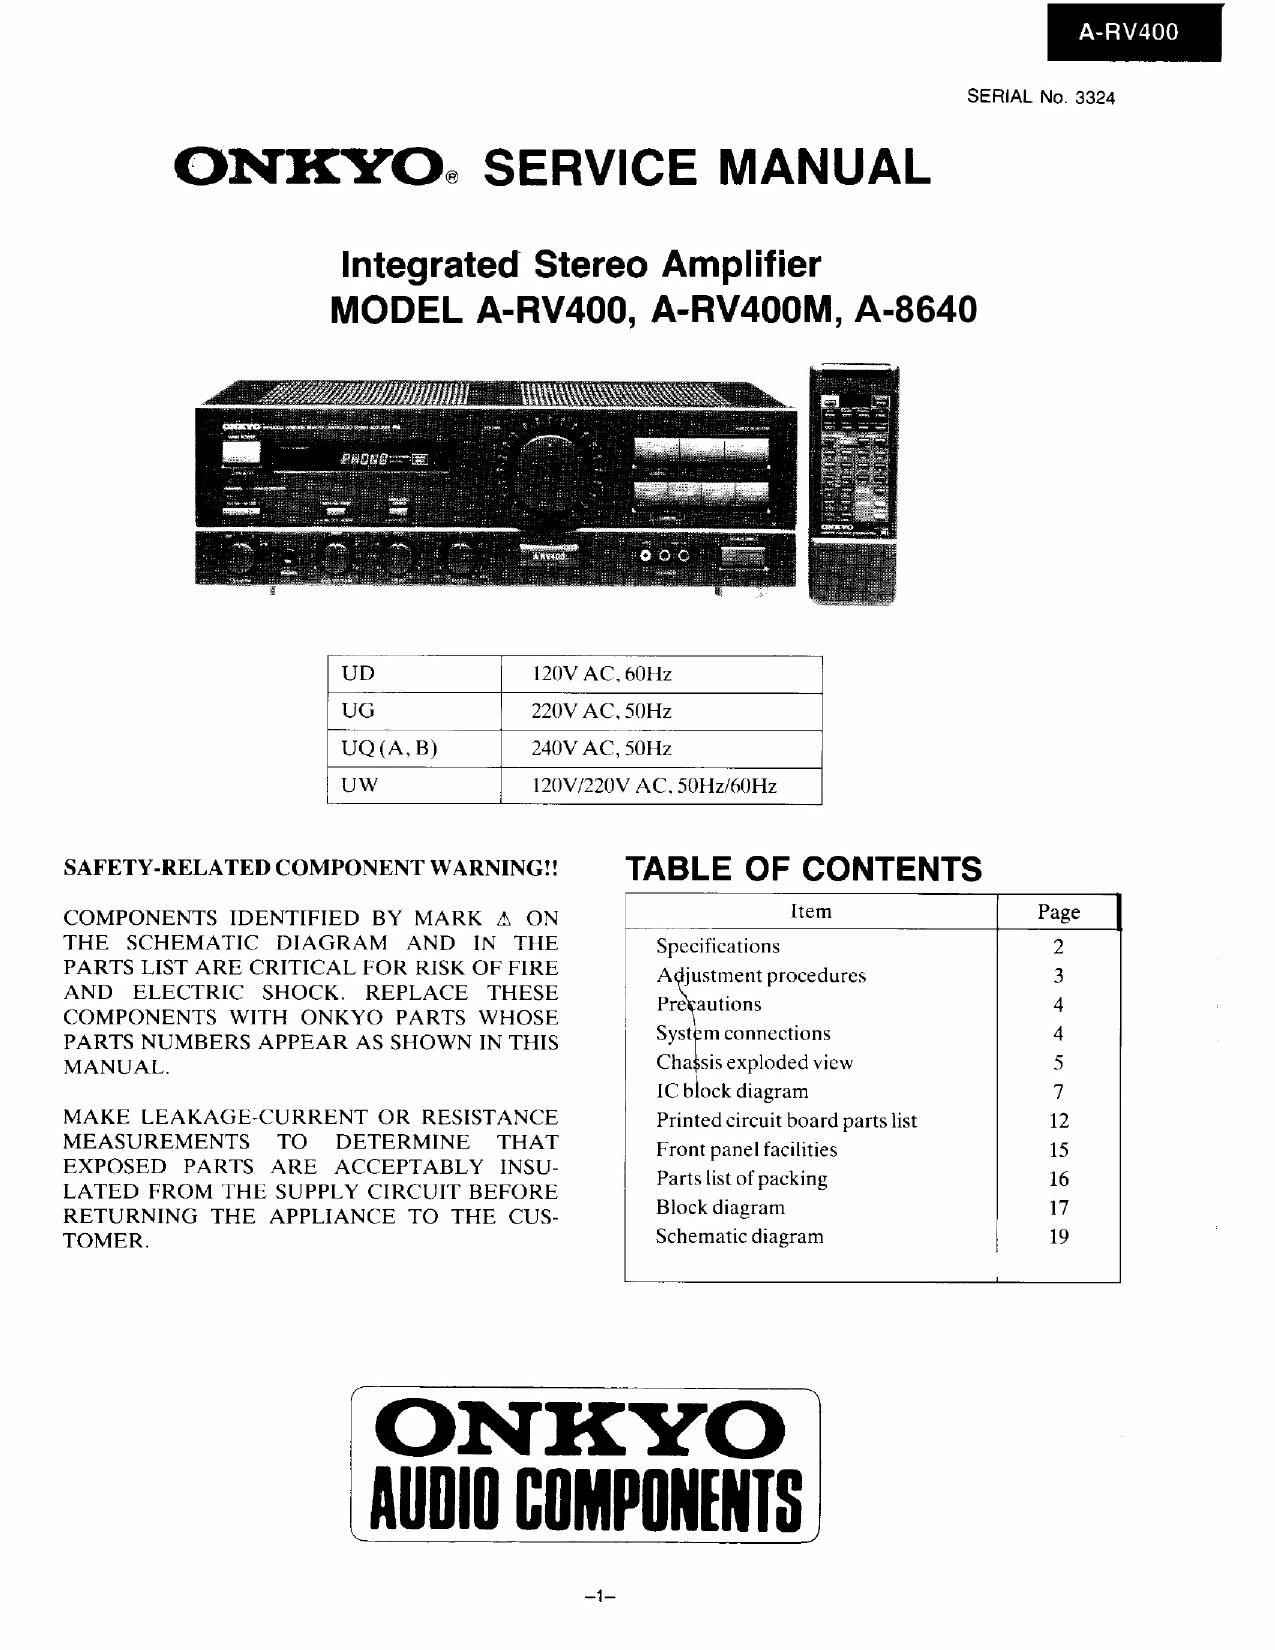 Onkyo ARV 400 M Service Manual